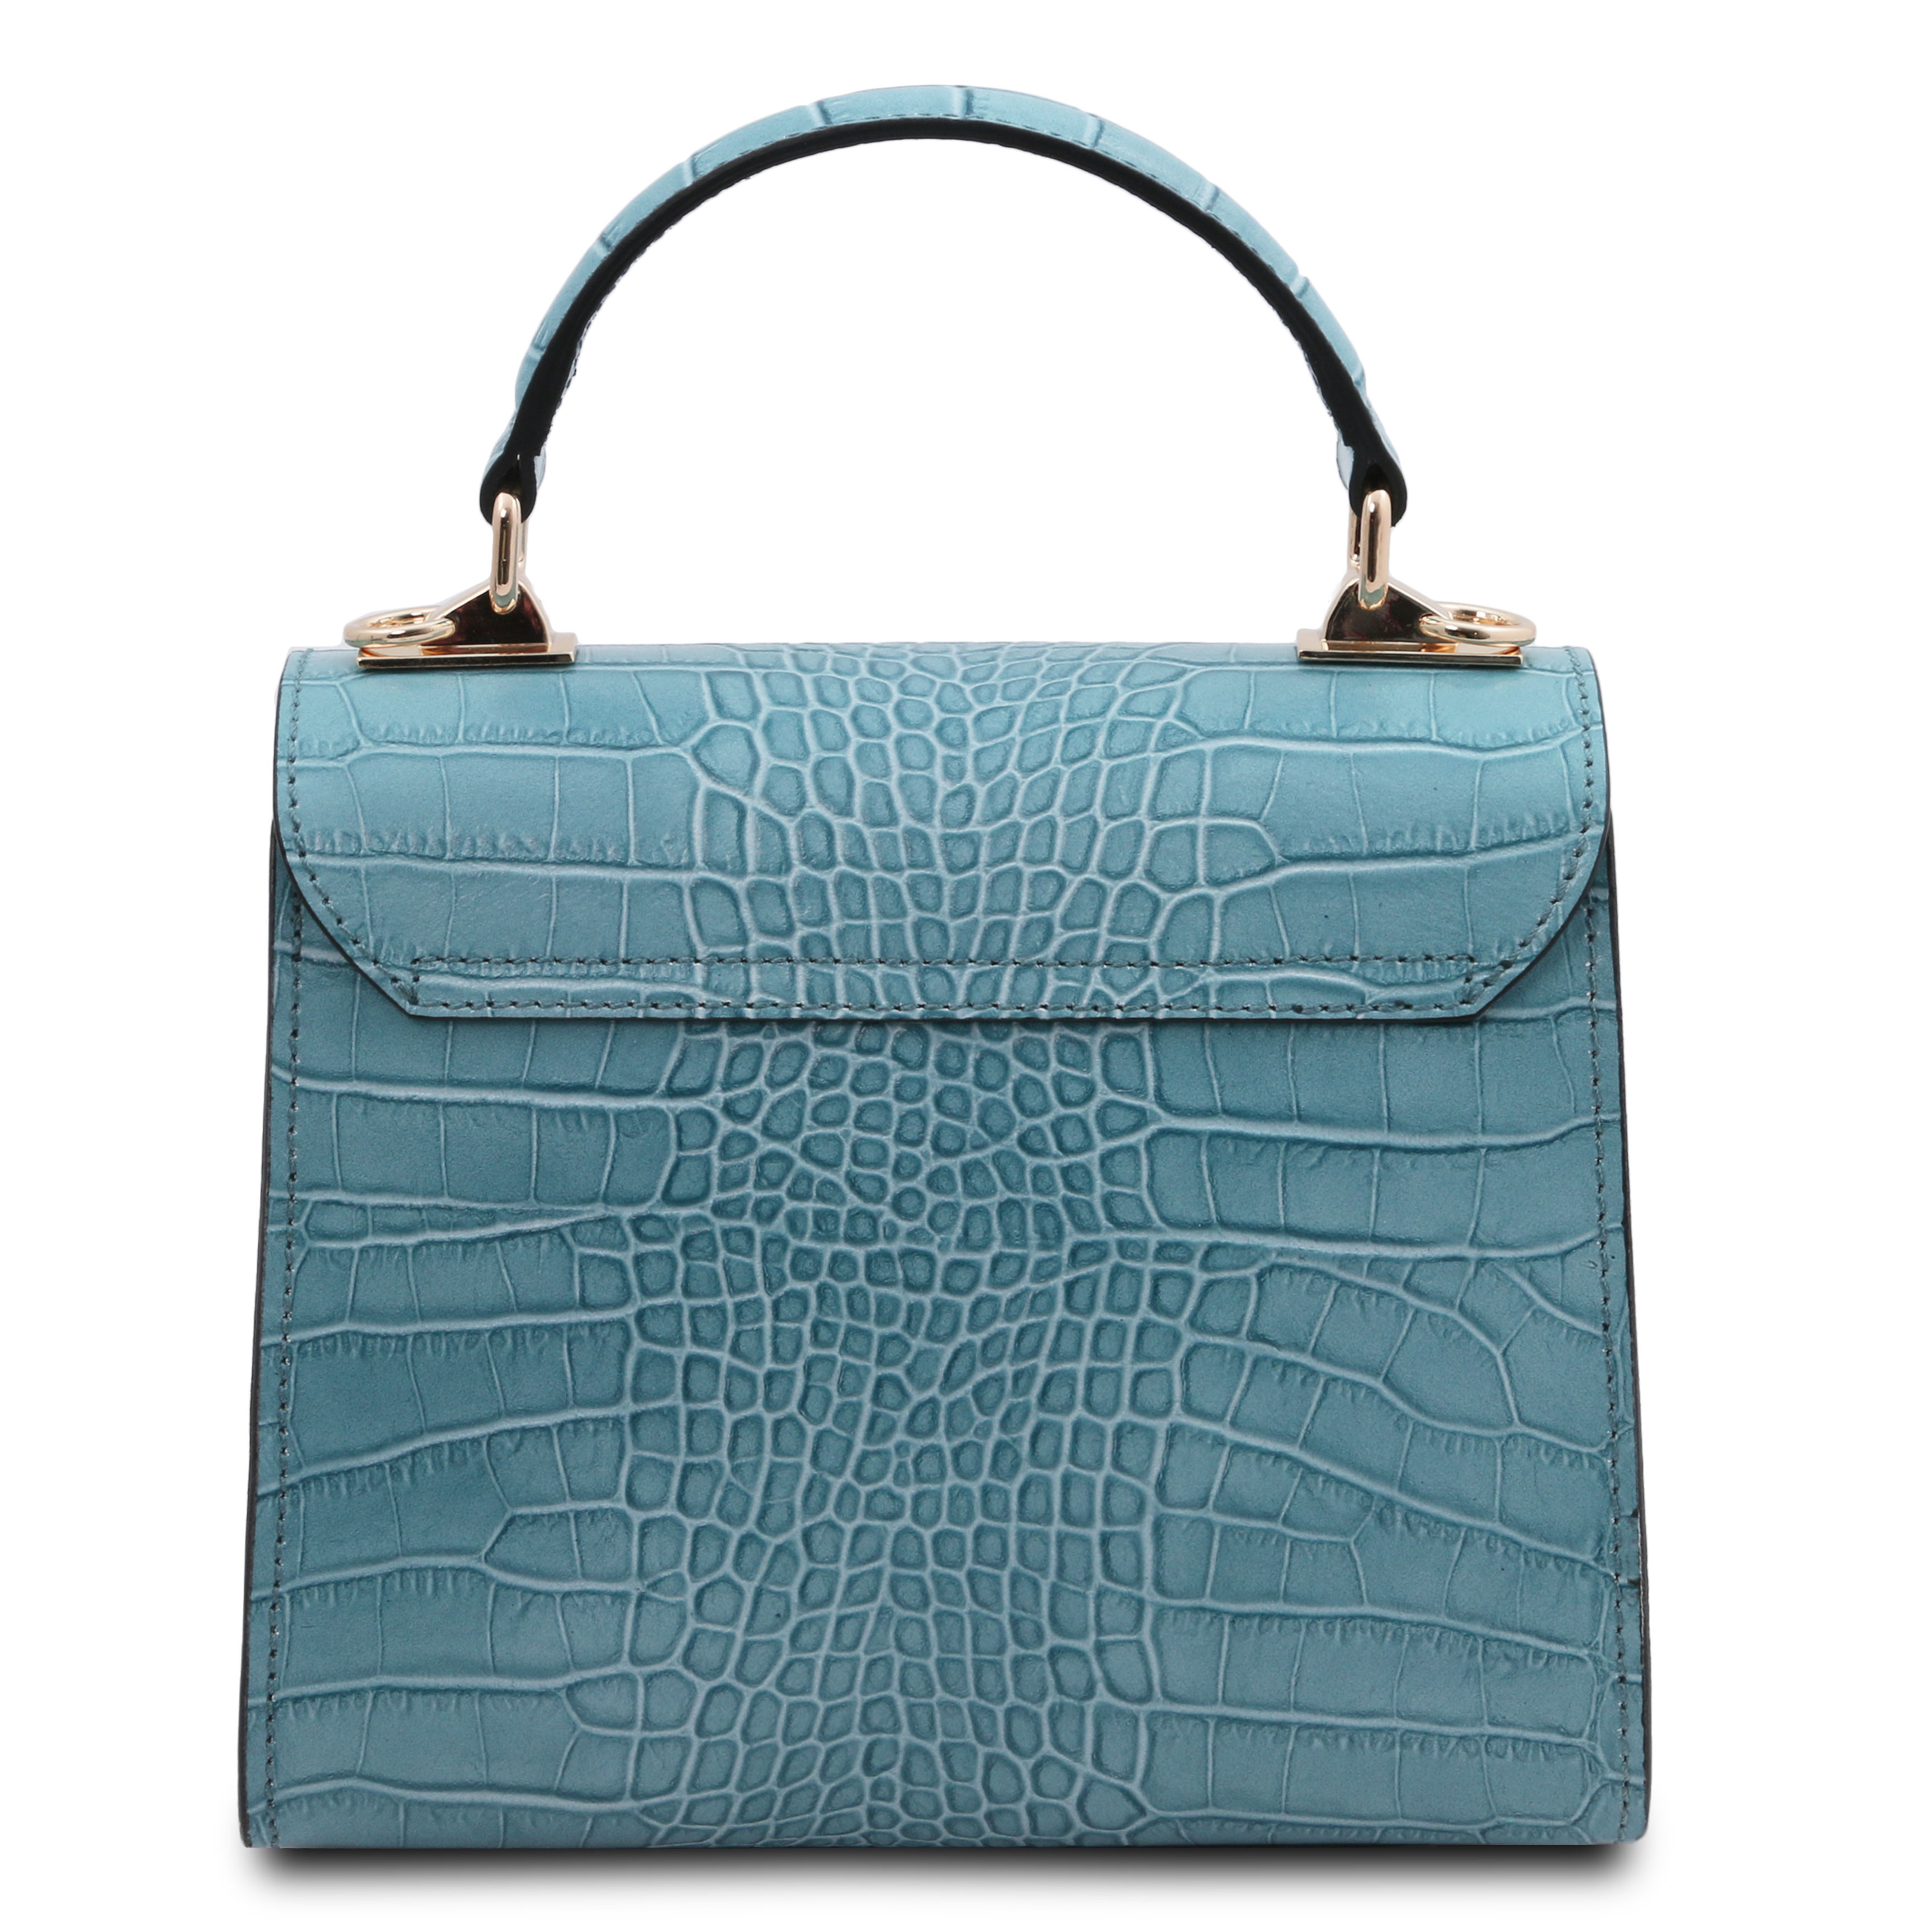 Buy Women Handbag Blue Colour Crocodile Leather Pattern at Amazon.in